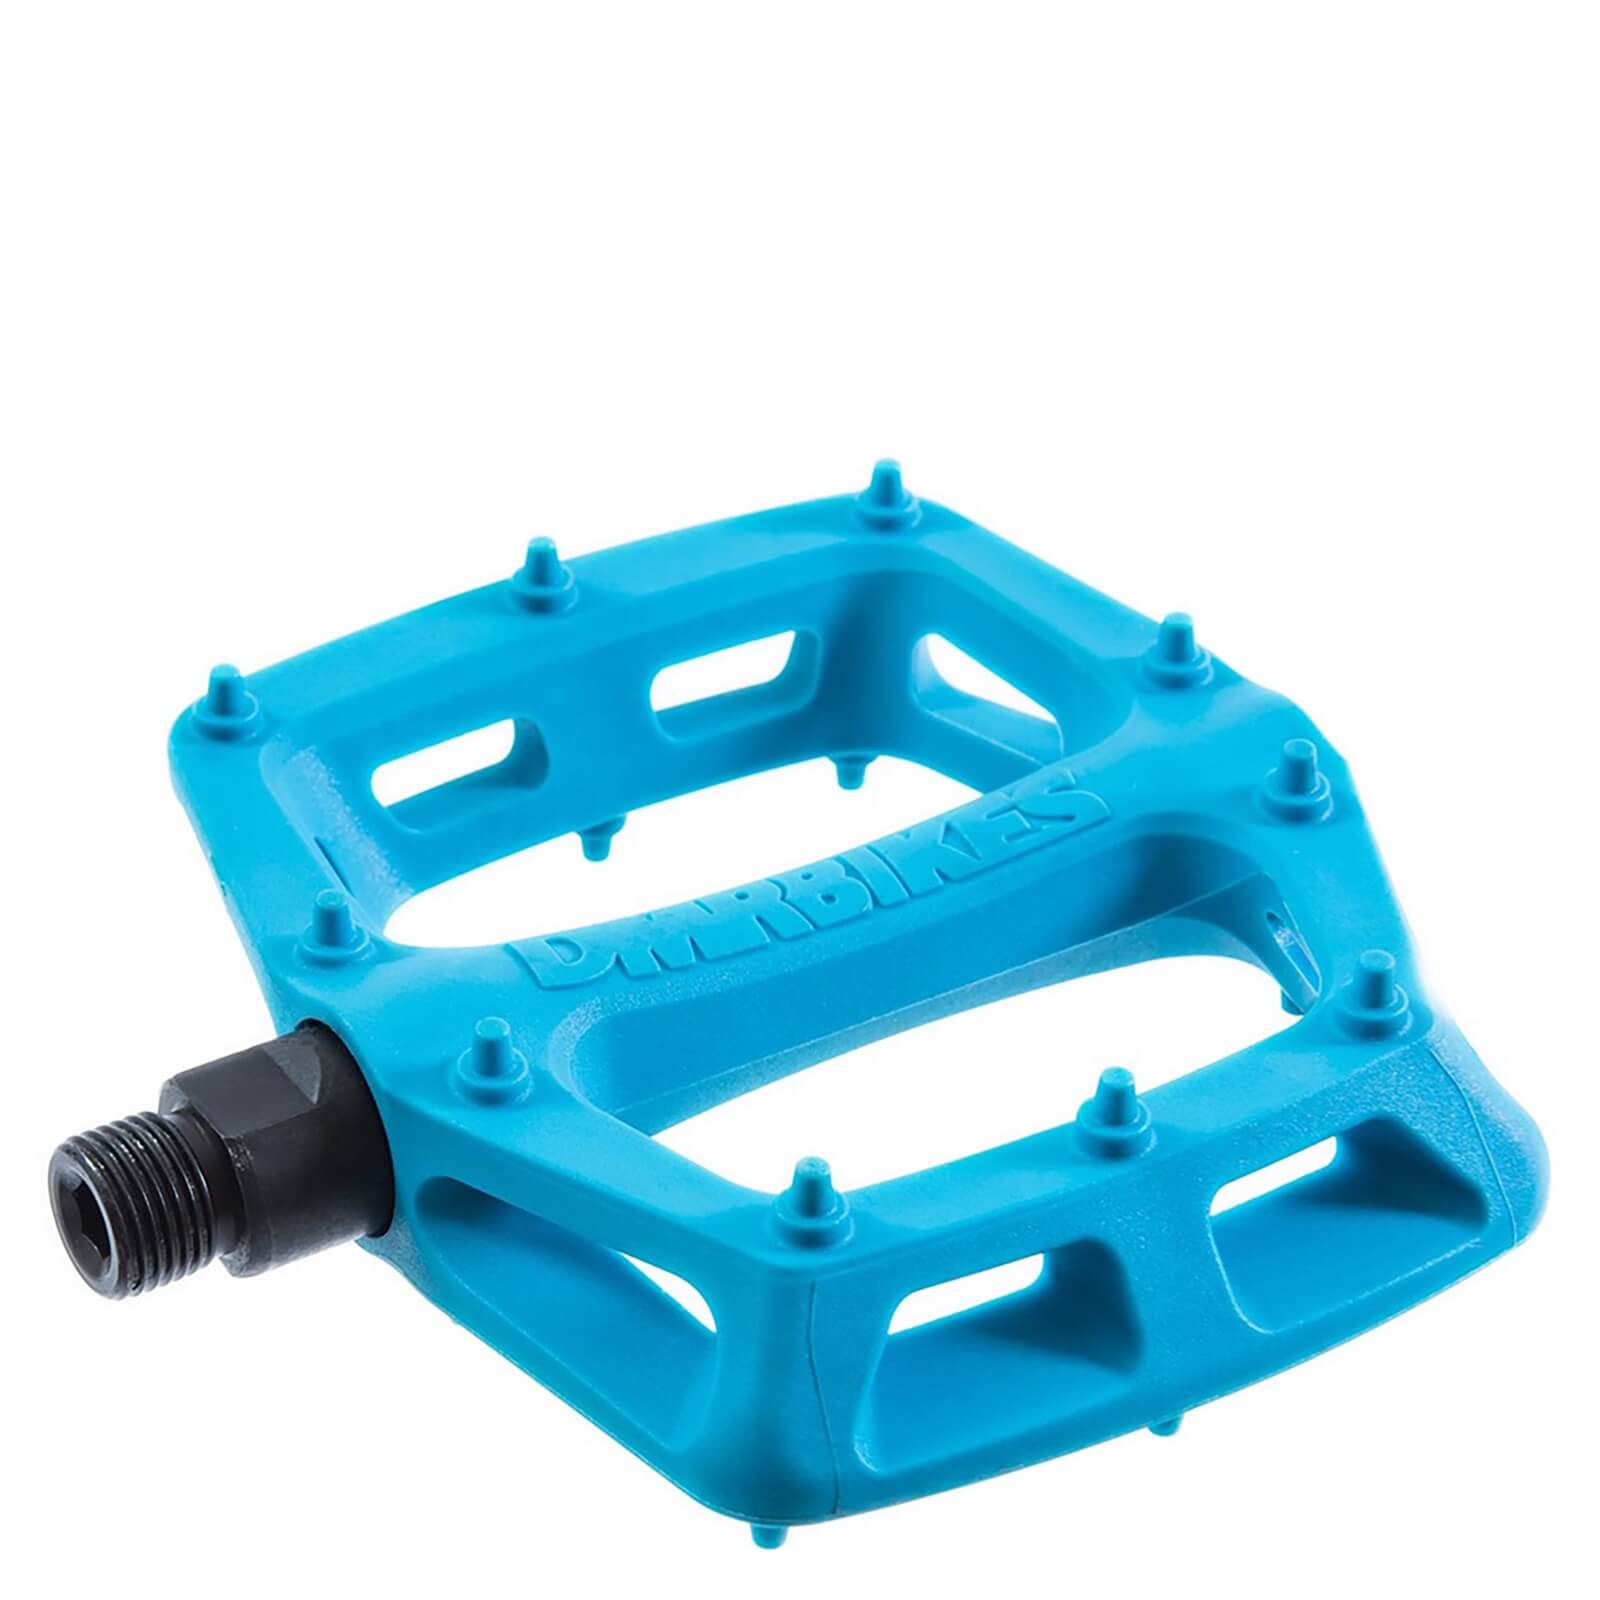 DMR V6 Plastic Flat Pedal - Blue